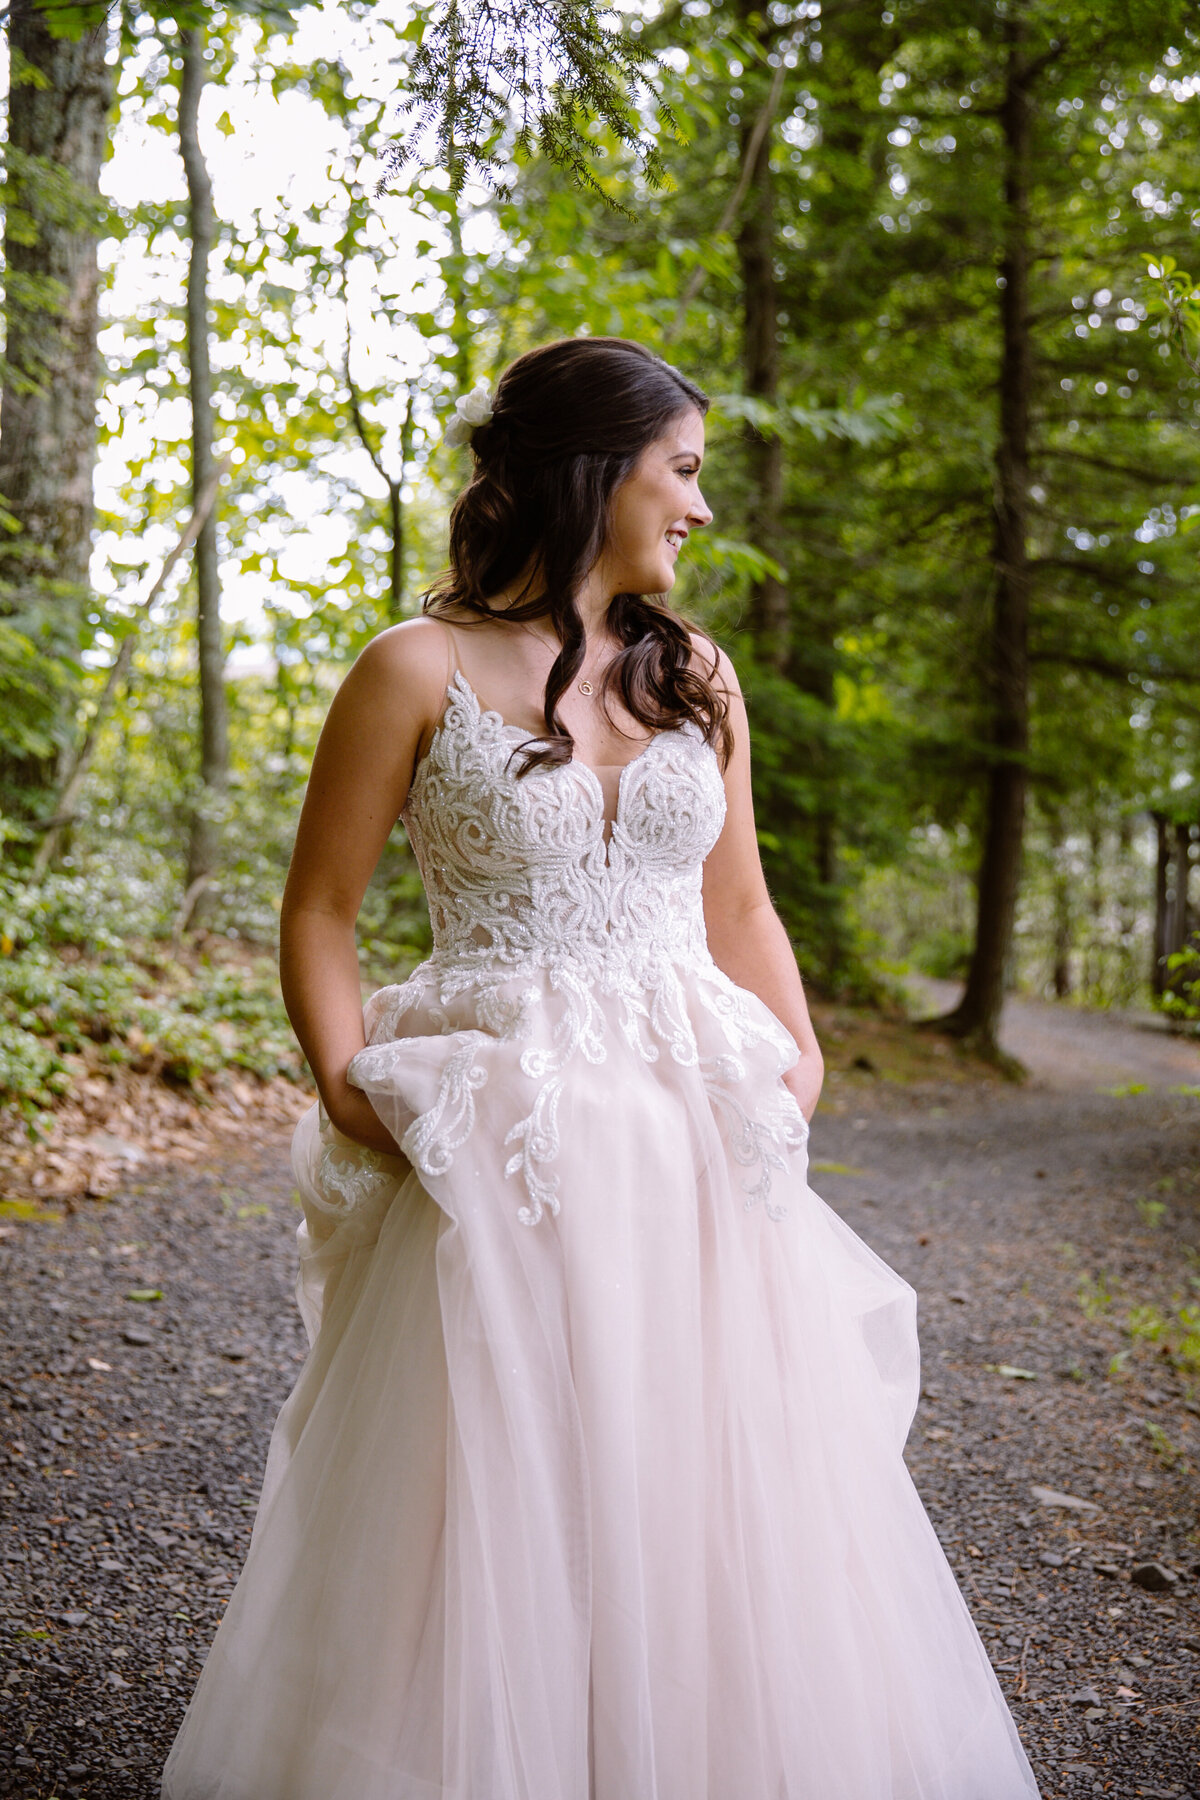 Catskills-NY-Onteora Mountain House-Wedding-Bridal Portrait-Kate Neal Photography.